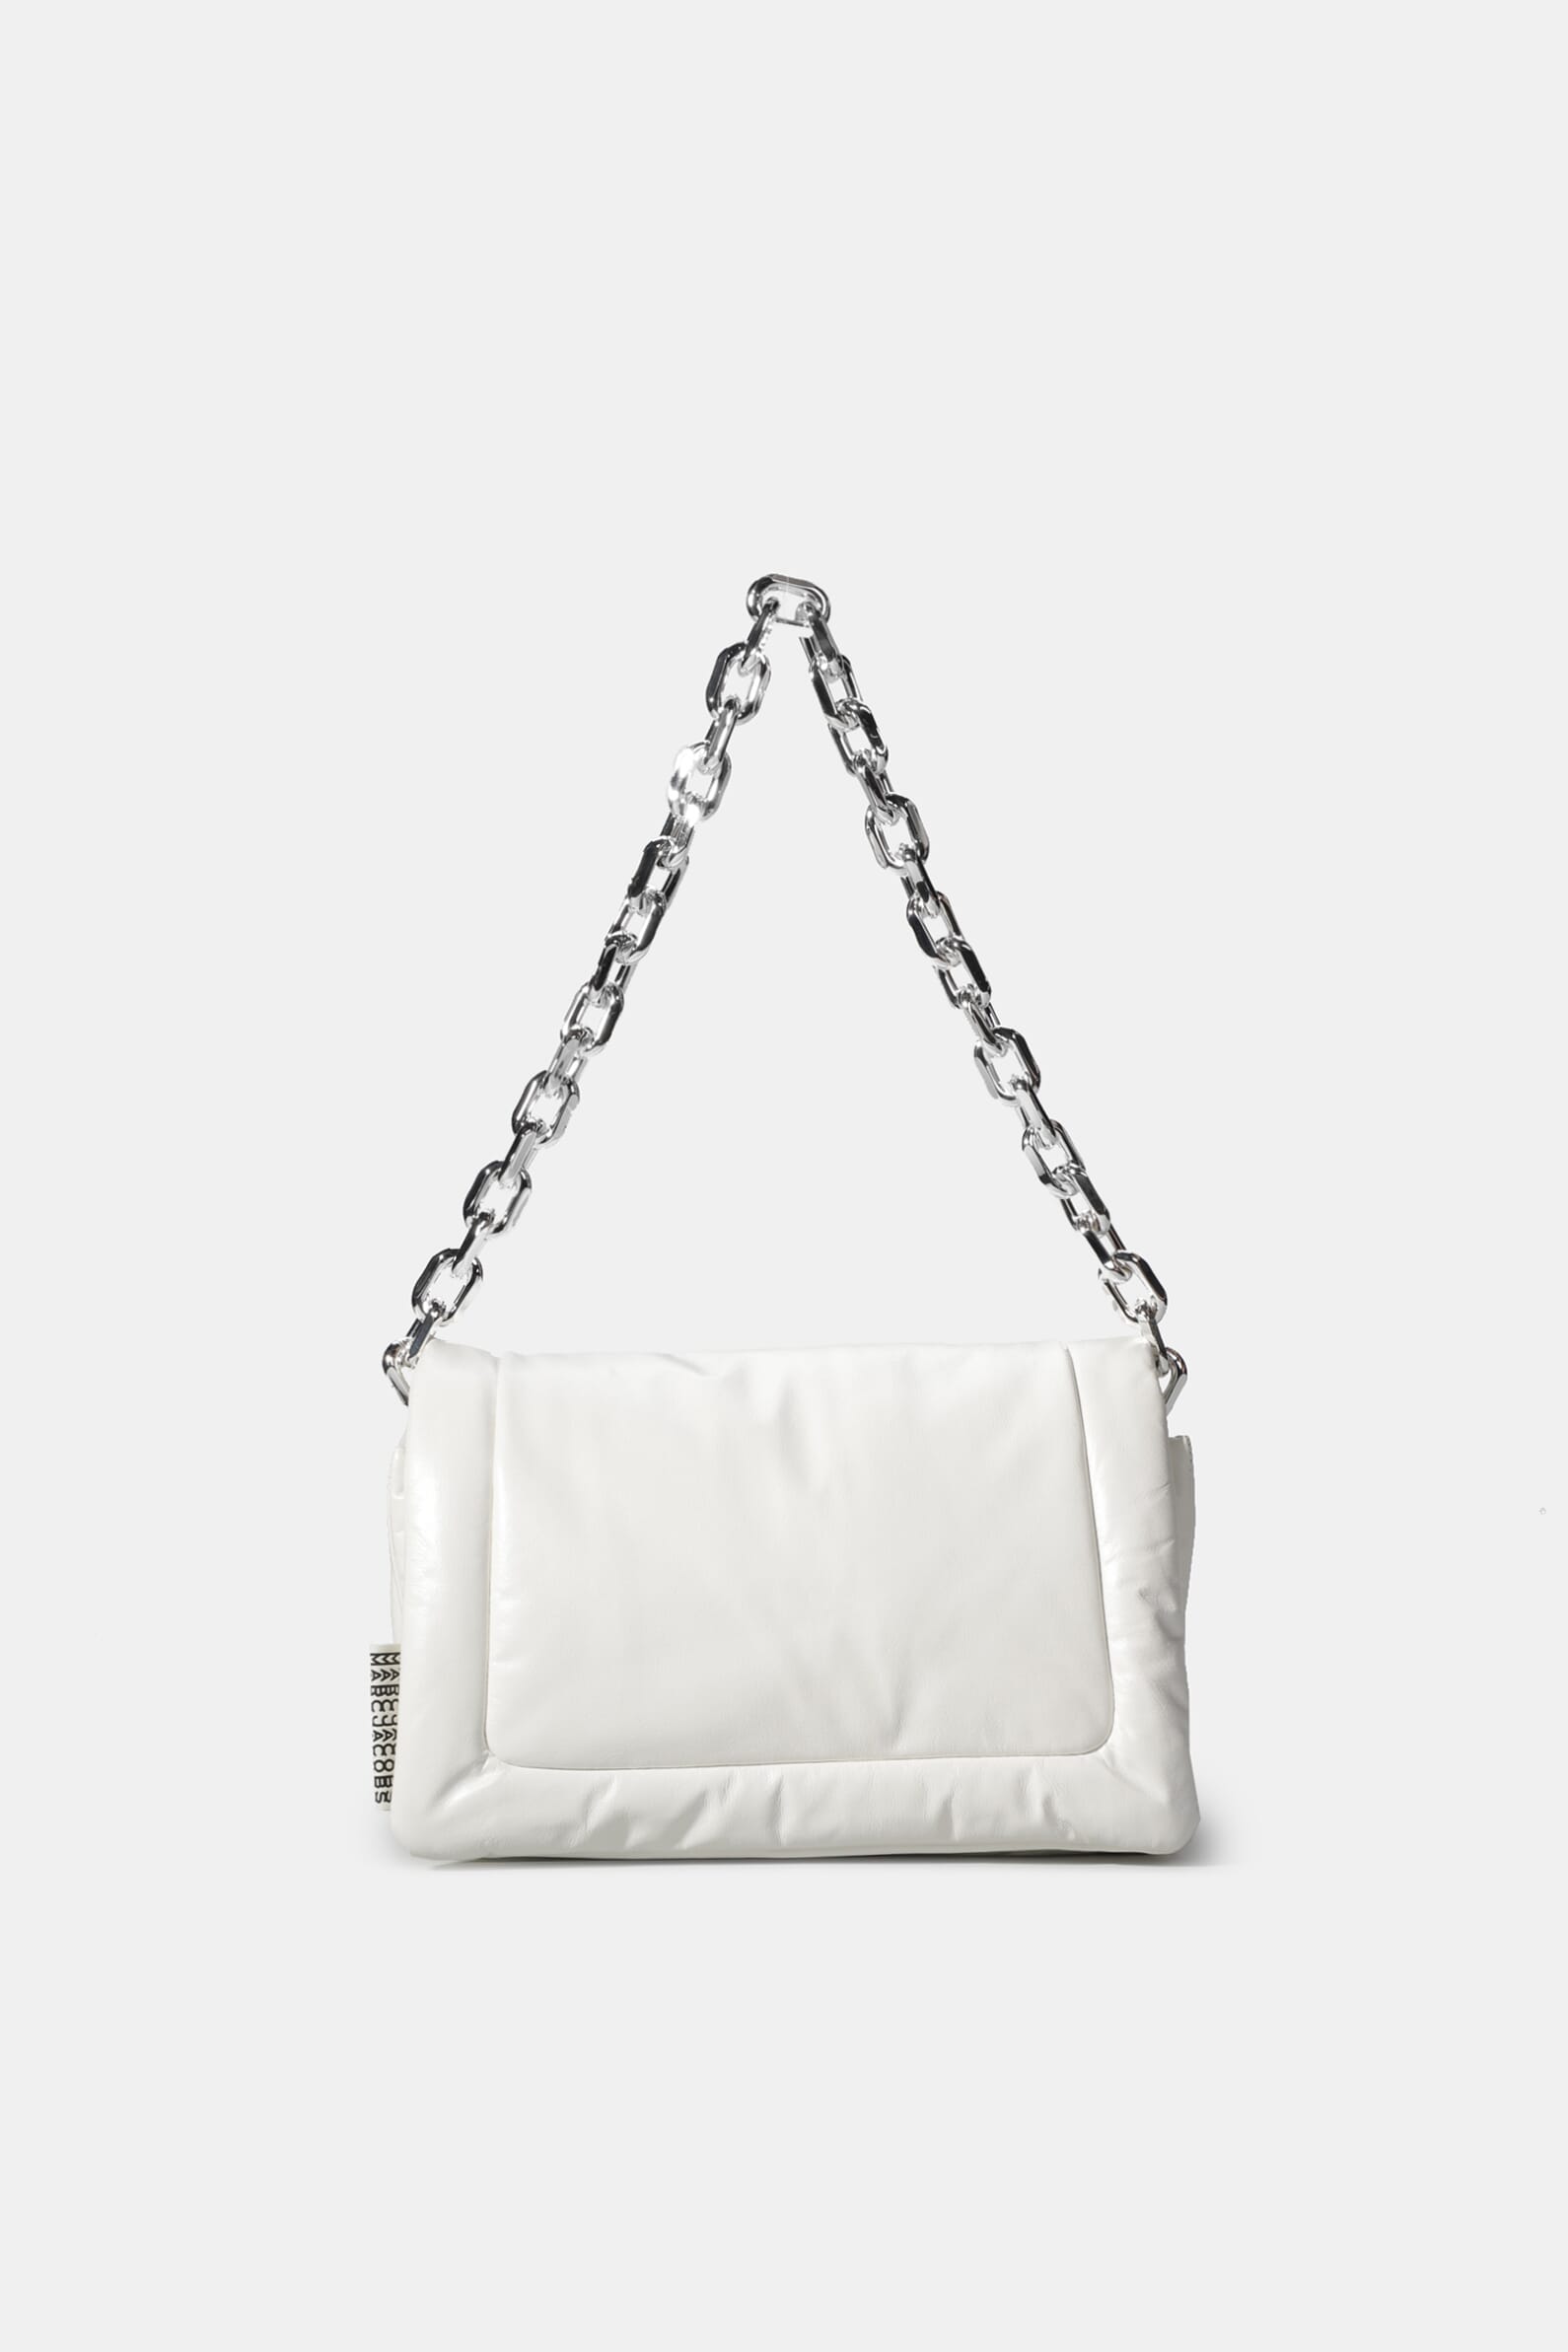 Marc Jacobs The Barcode Pillow Shoulder Bag